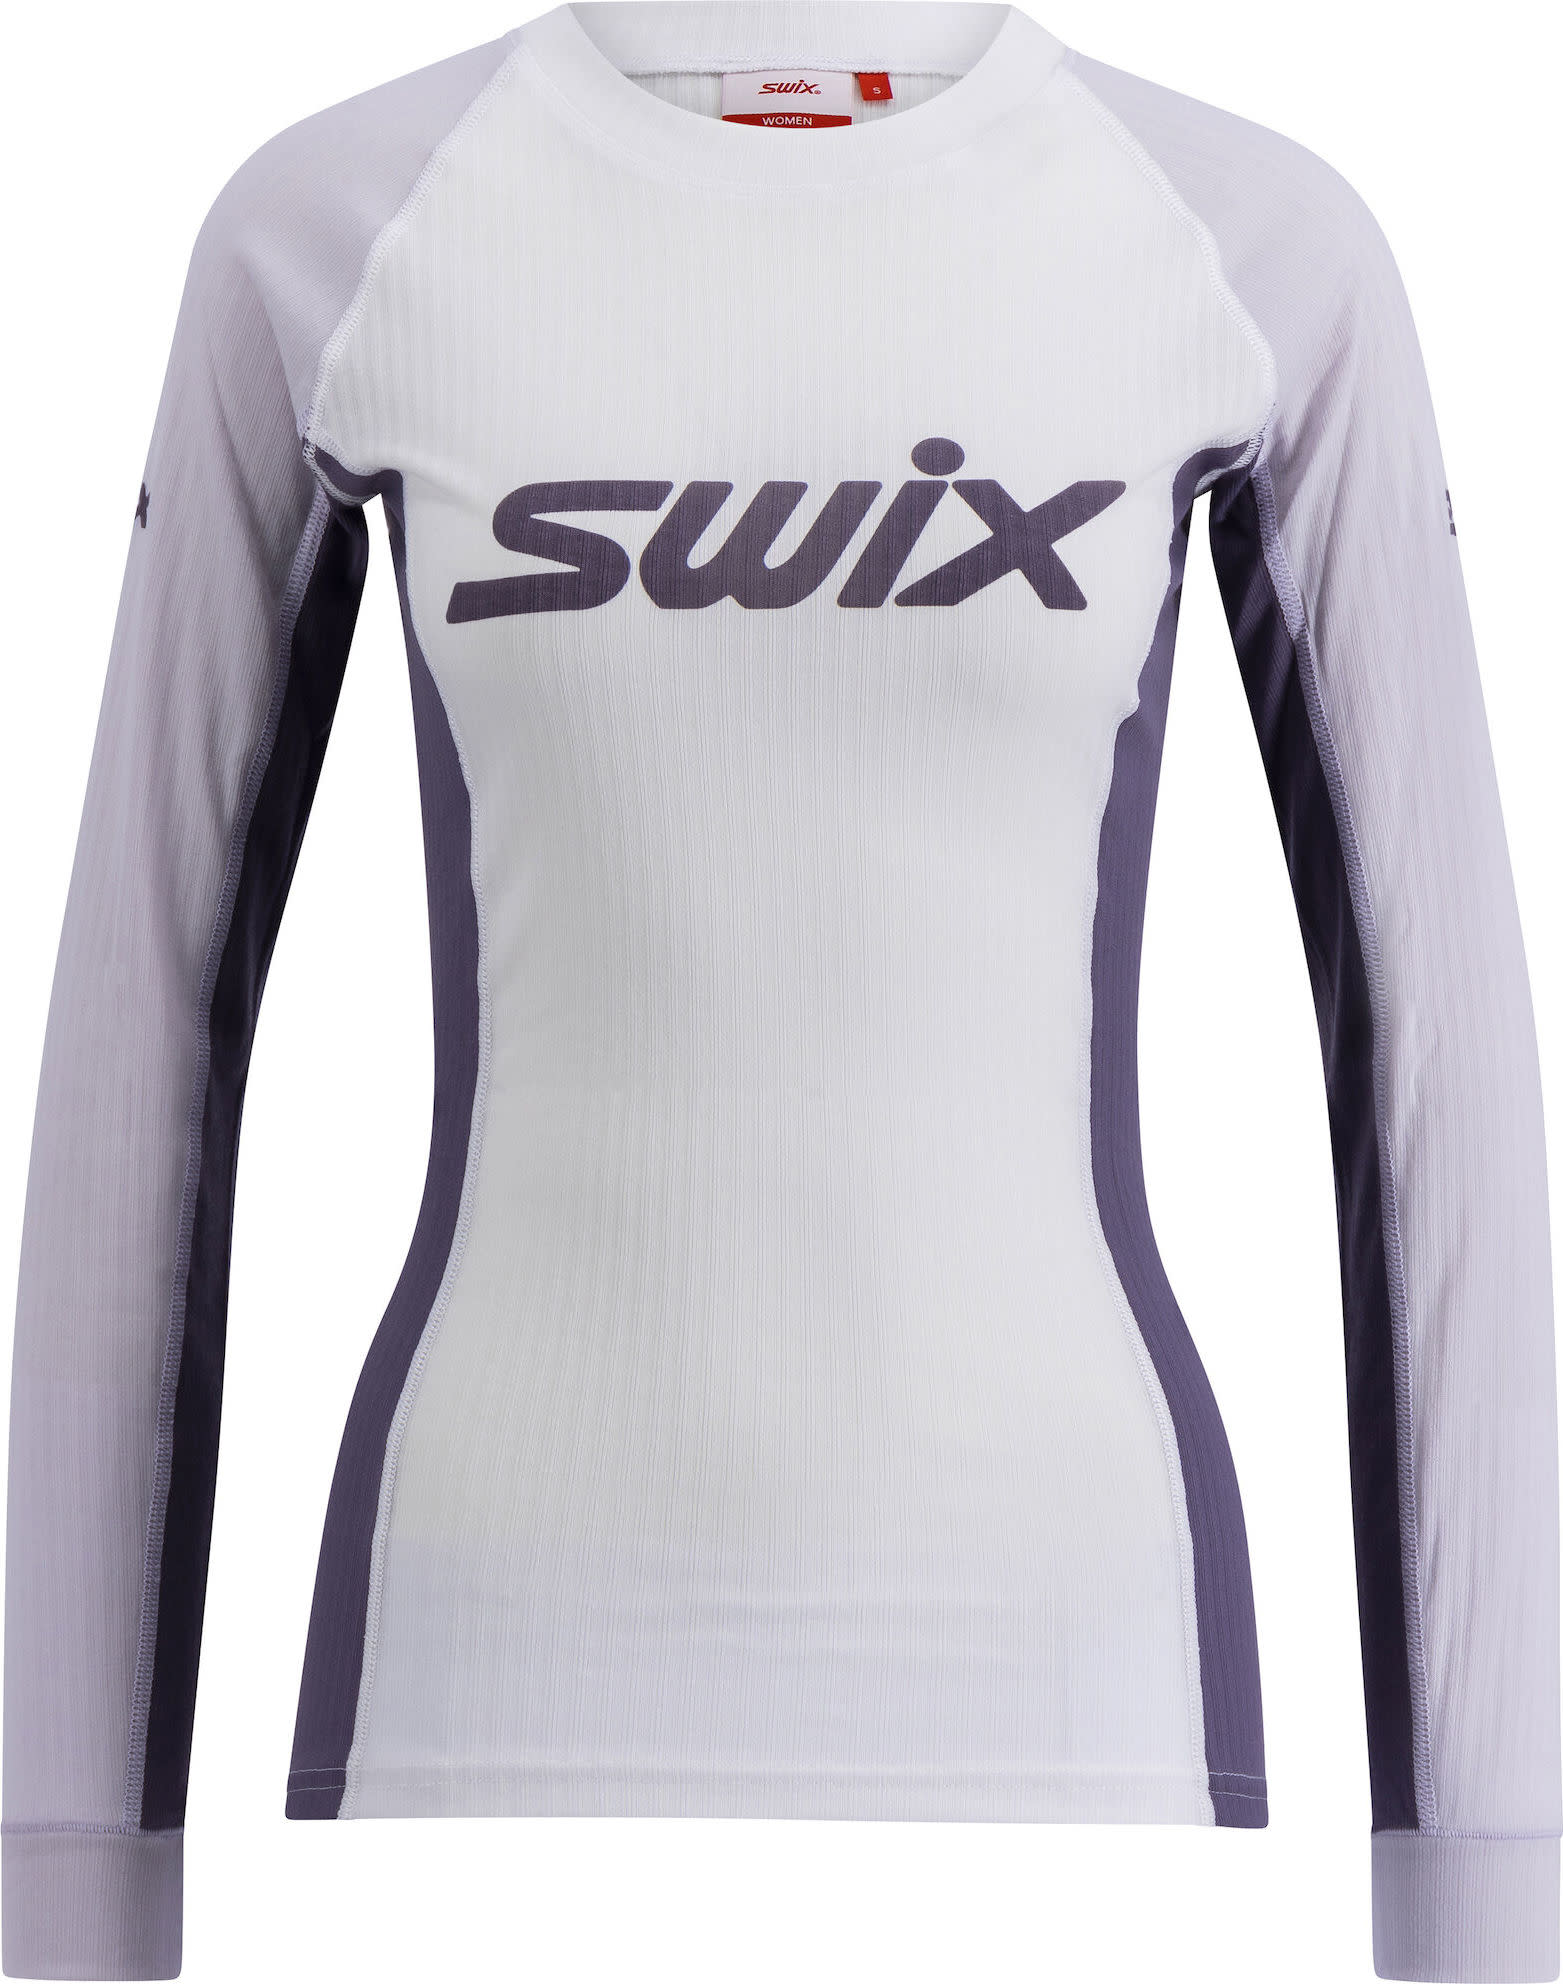 Women’s RaceX Classic Long Sleeve Bright White/ Dusty purple